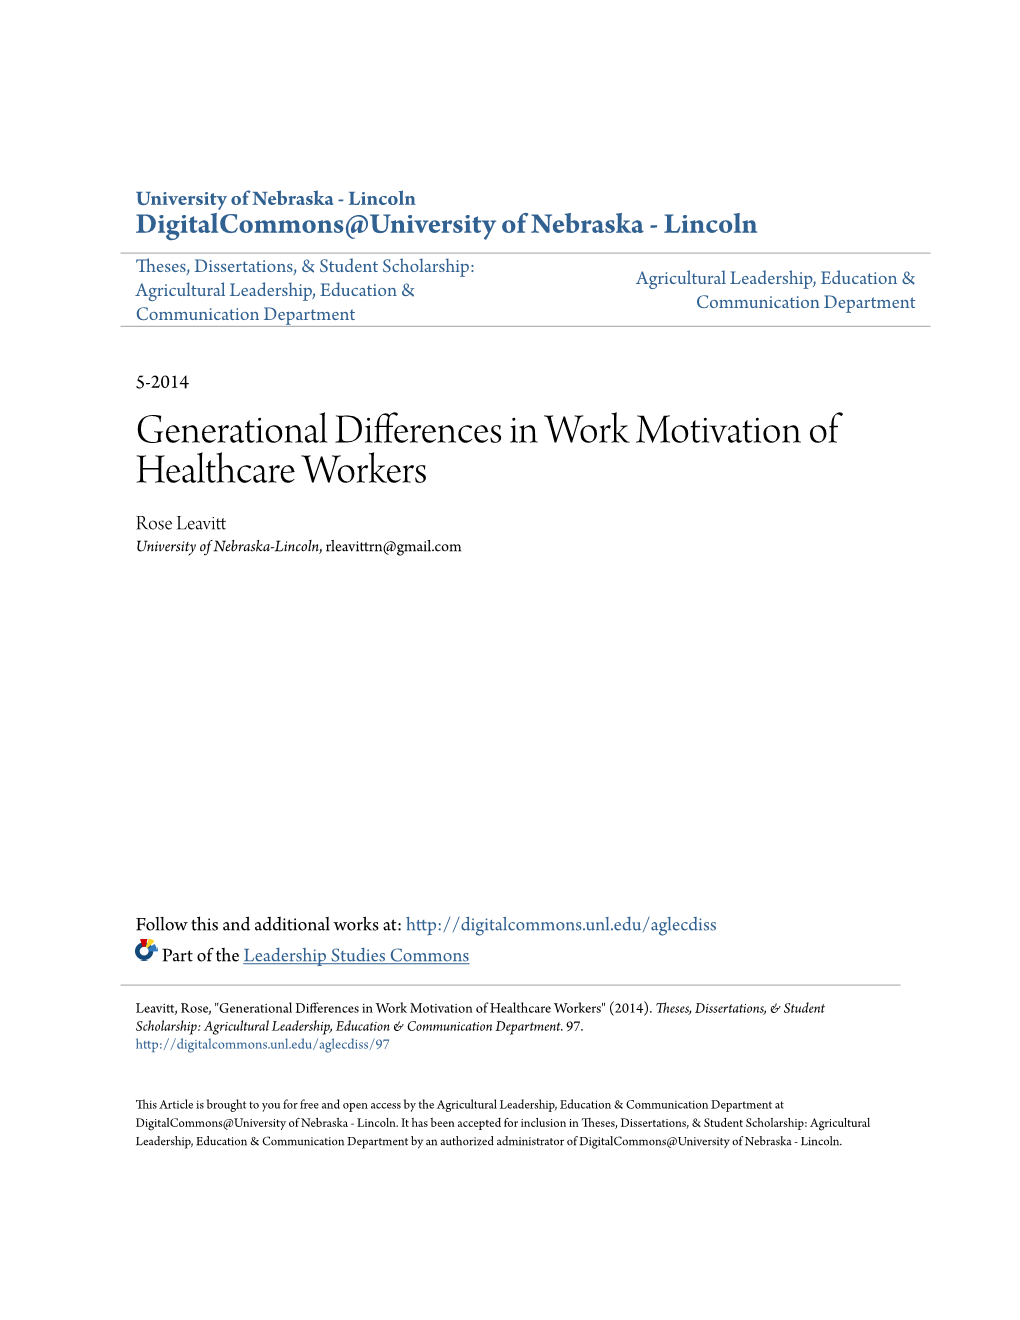 Generational Differences in Work Motivation of Healthcare Workers Rose Leavitt University of Nebraska-Lincoln, Rleavittrn@Gmail.Com